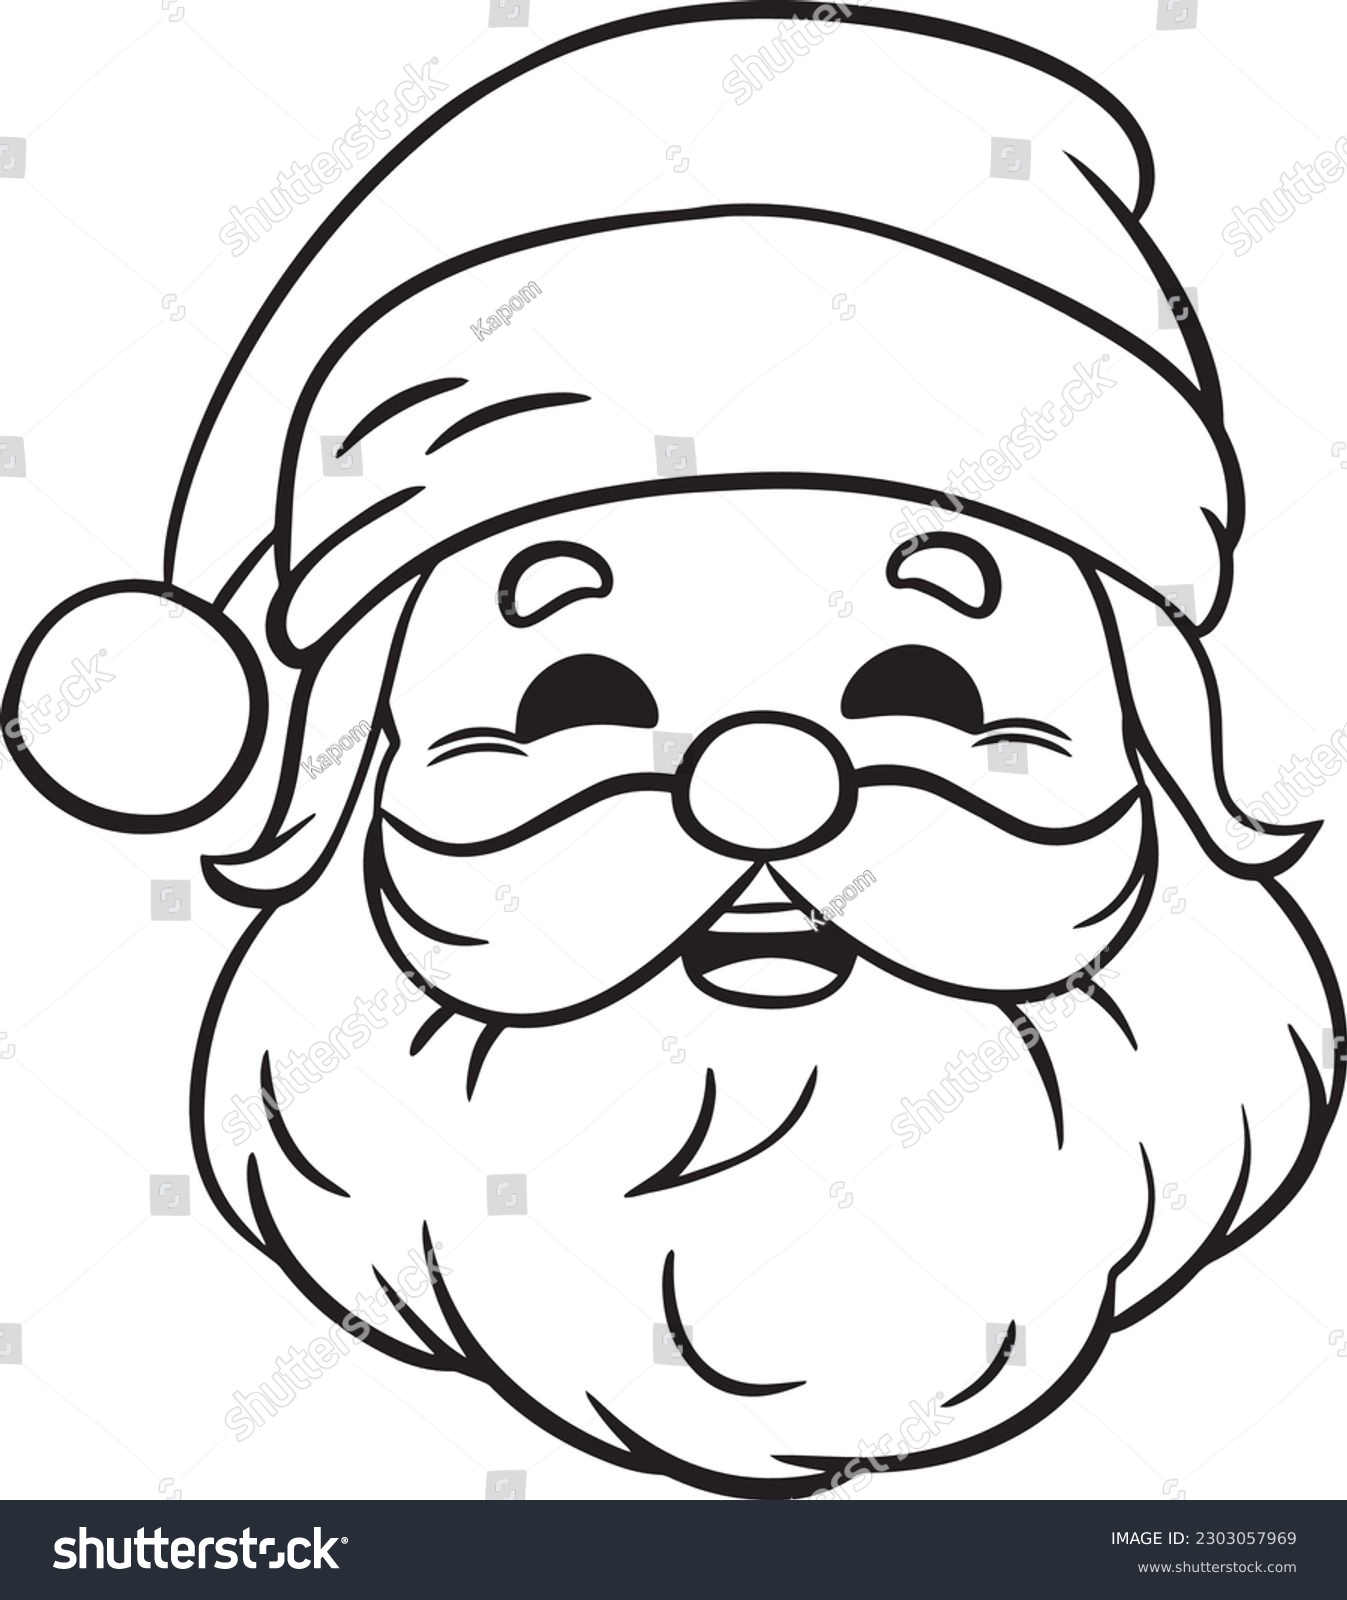 Santa claus christmas coloring page kids stock vector royalty free